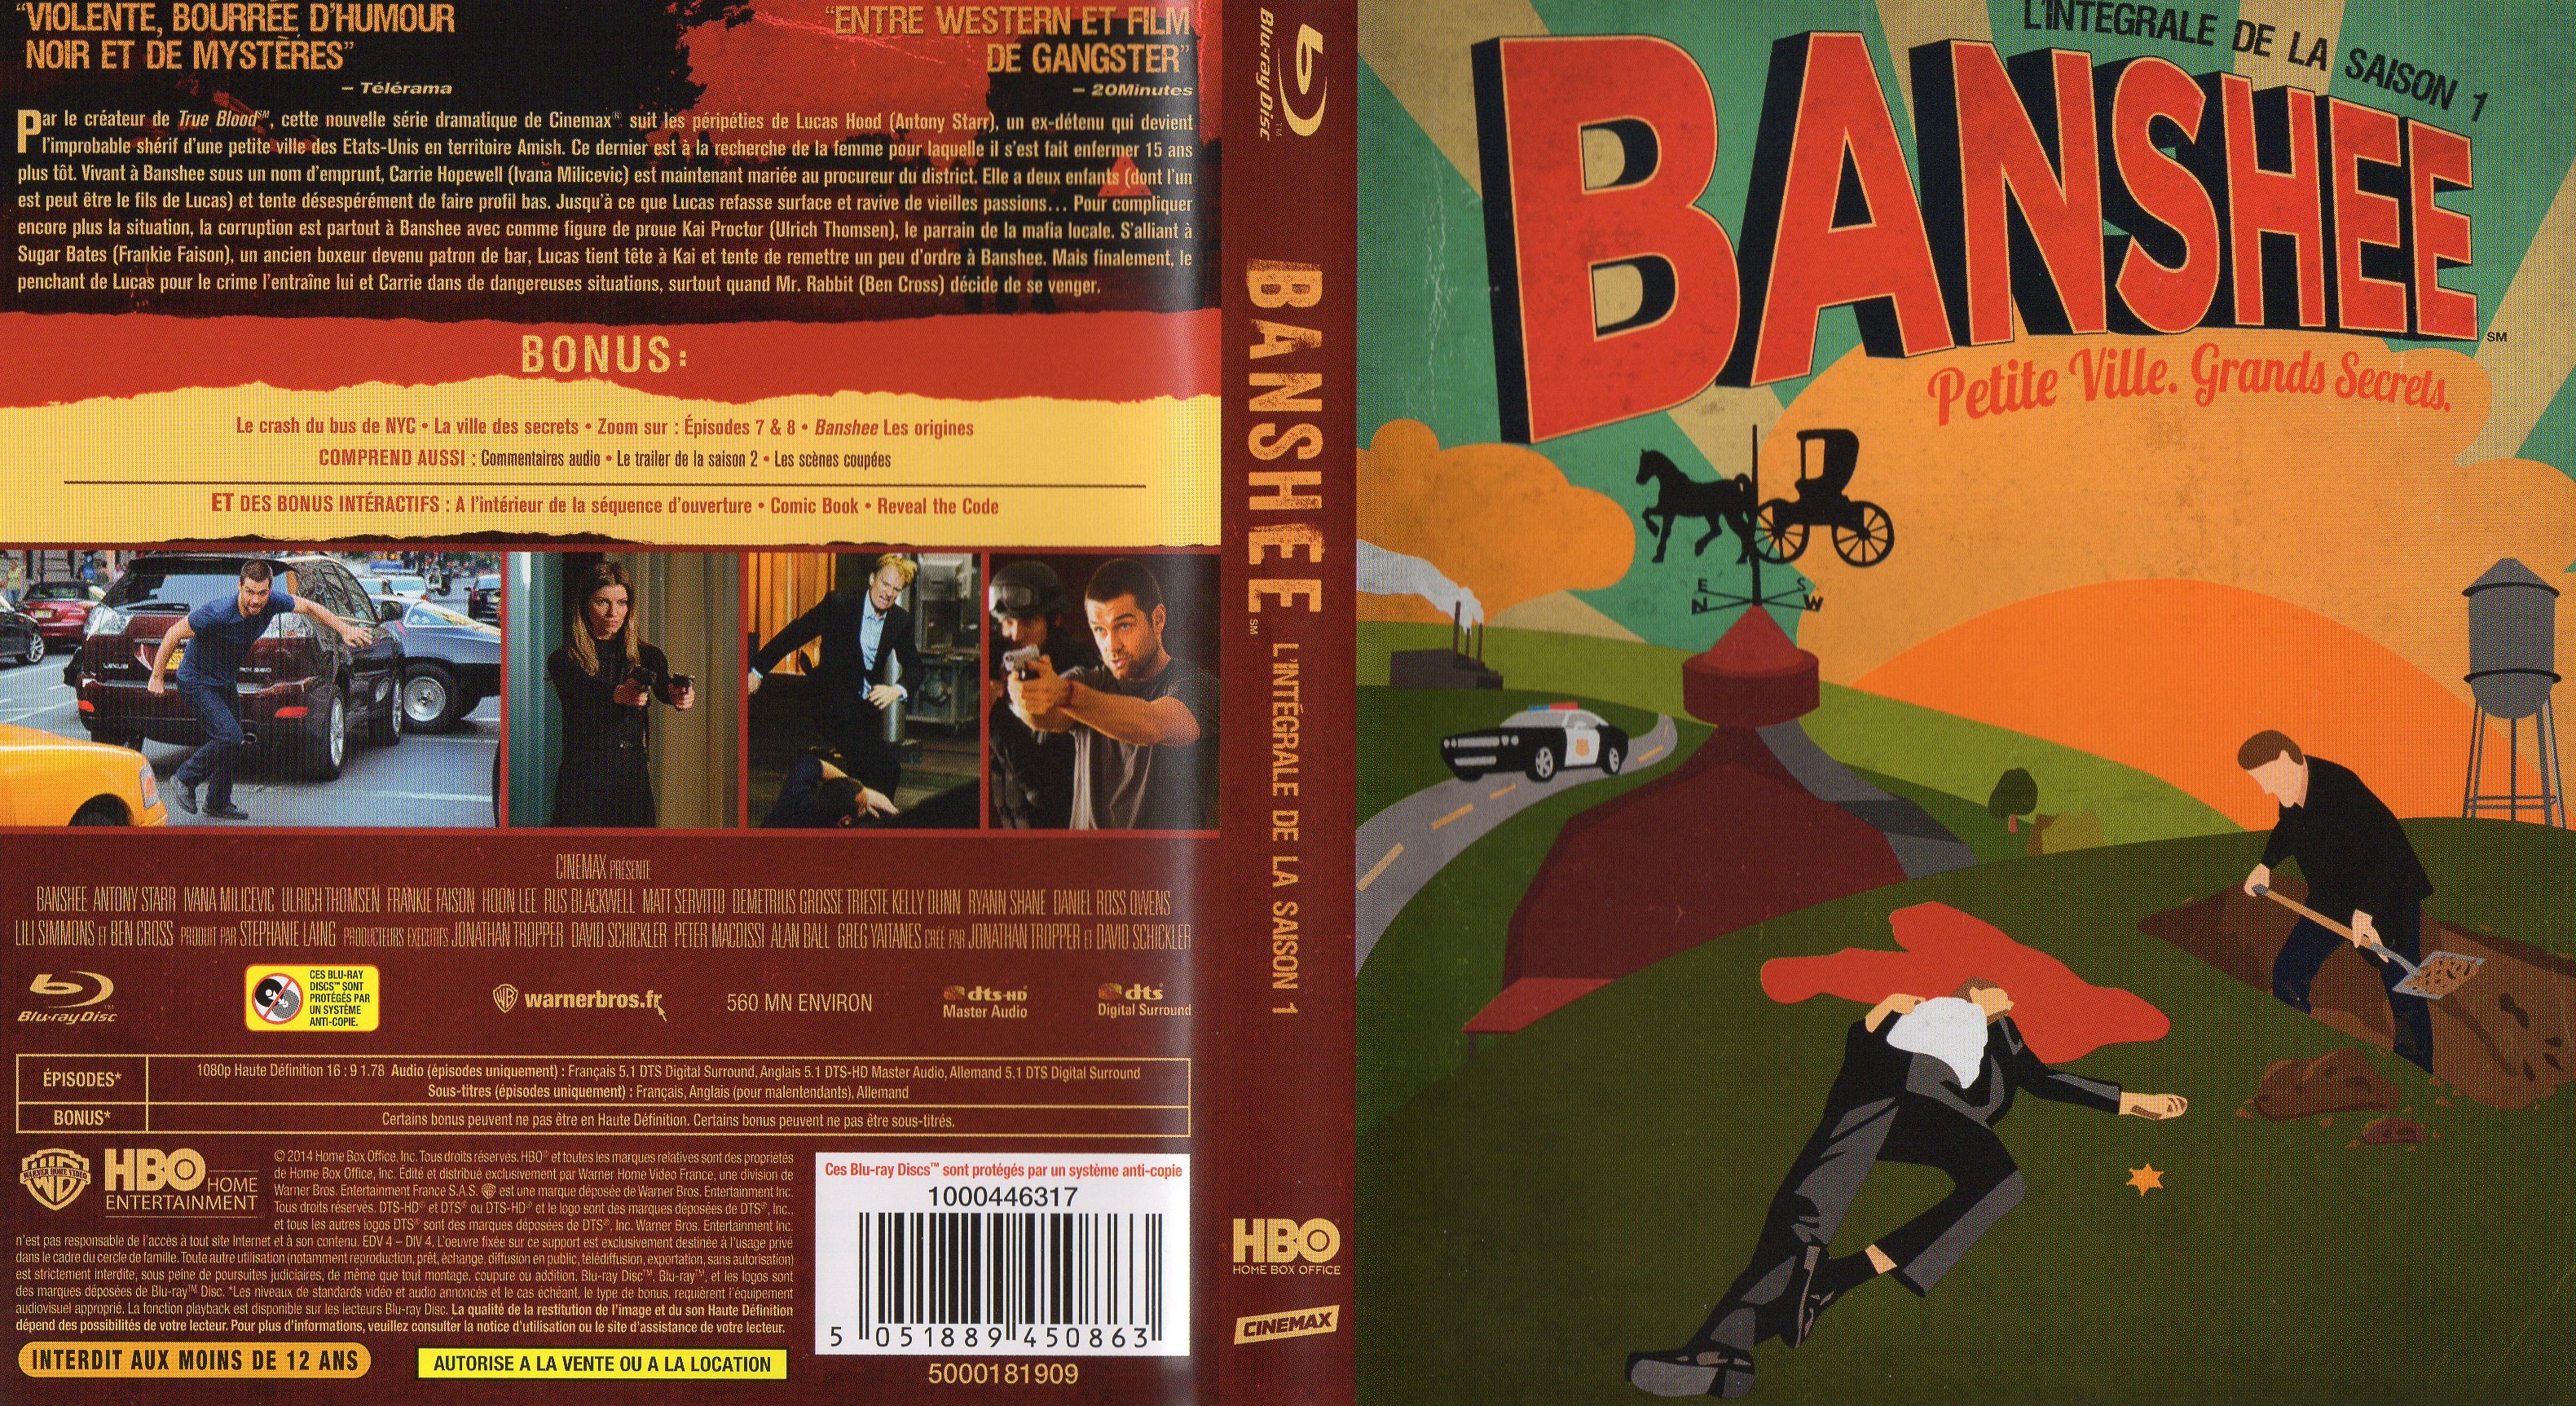 Jaquette DVD Banshee saison 1 (BLU-RAY)